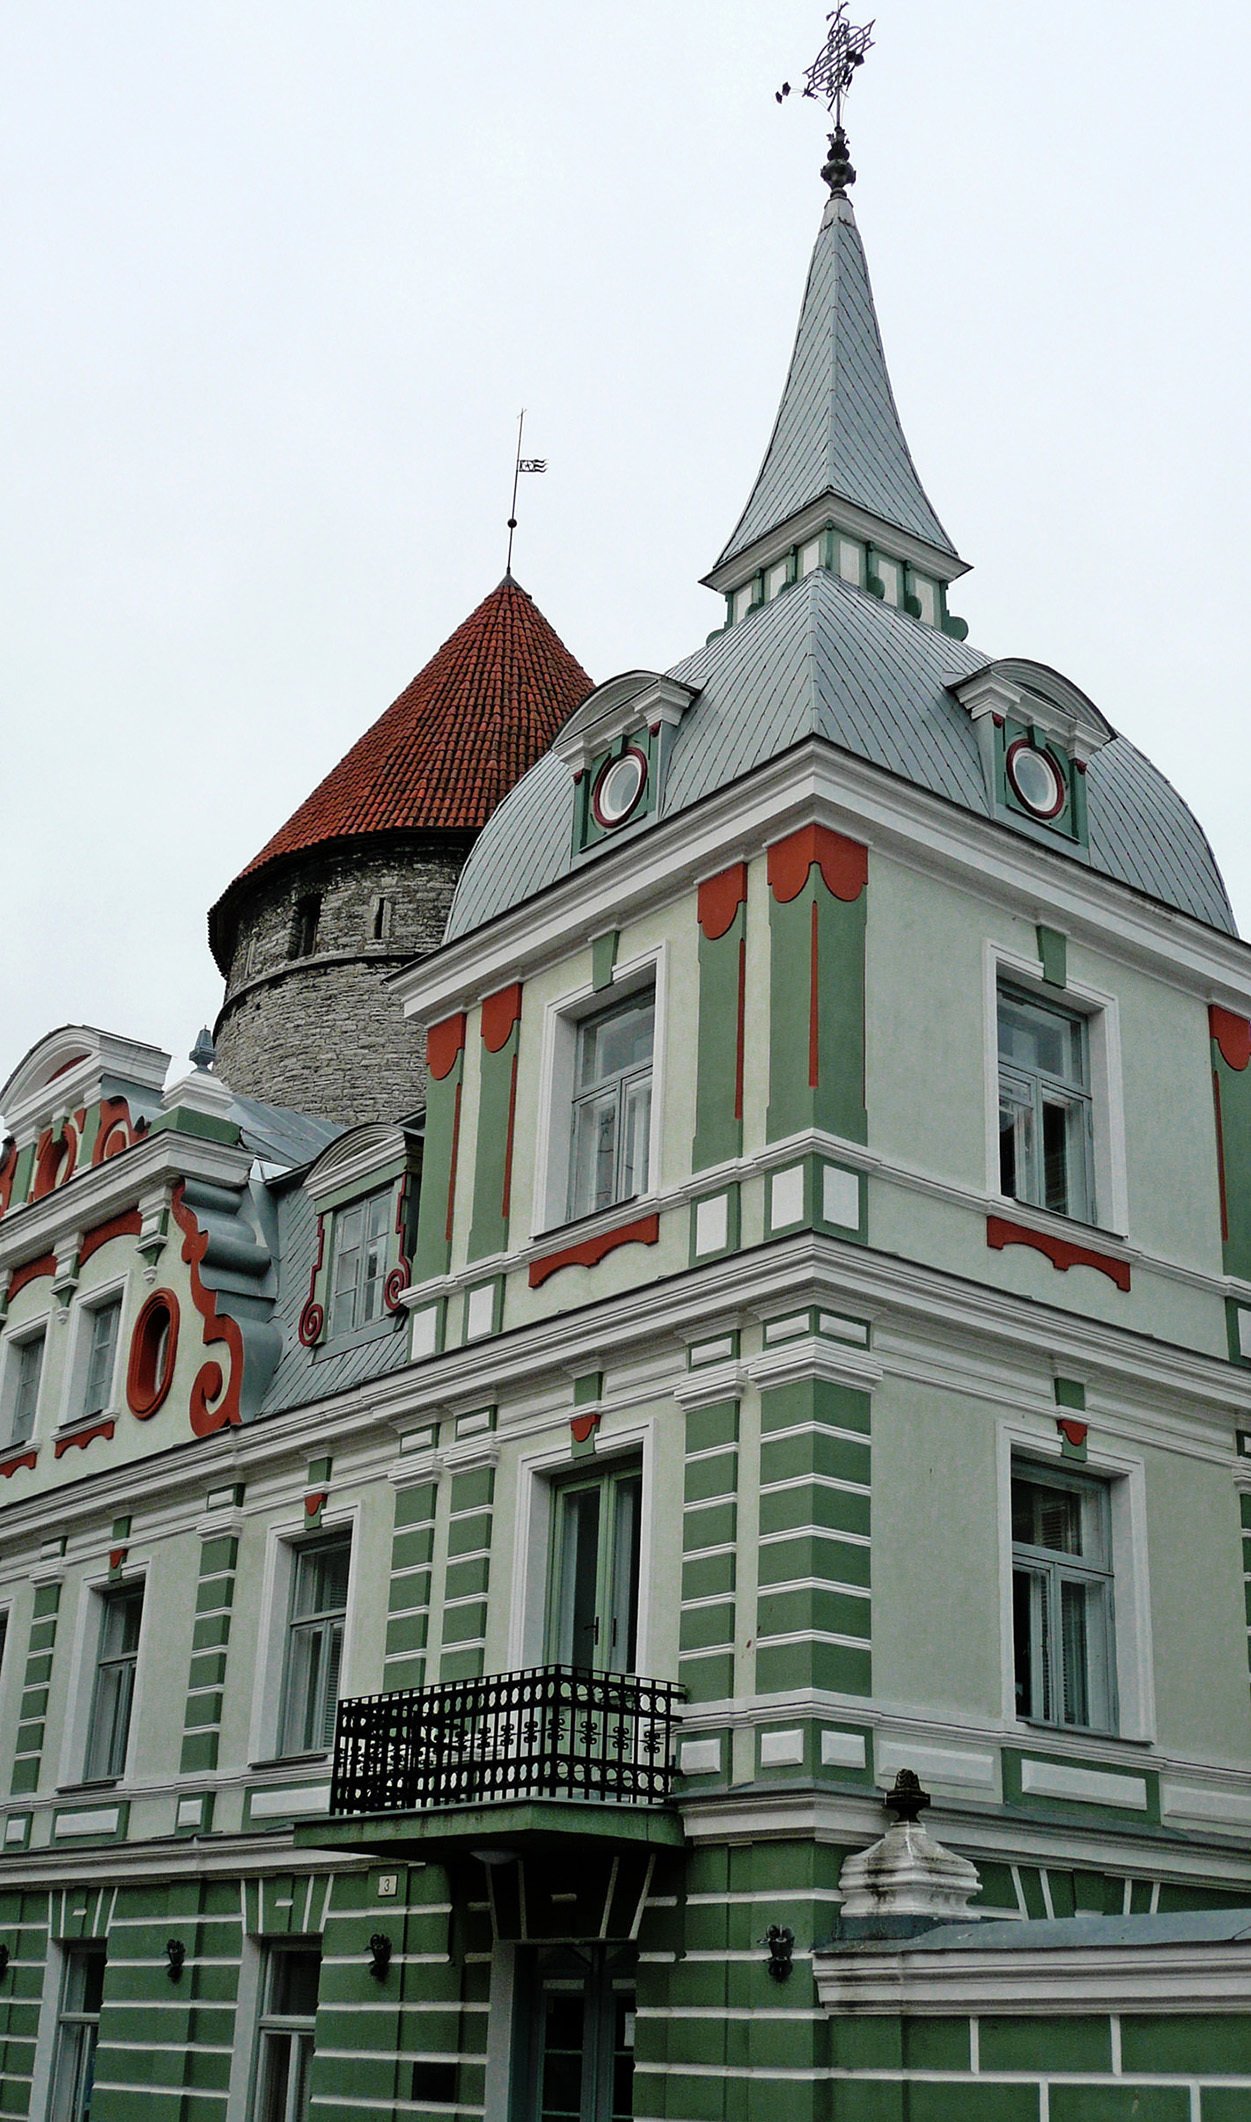 Building in Tallinn Estonia